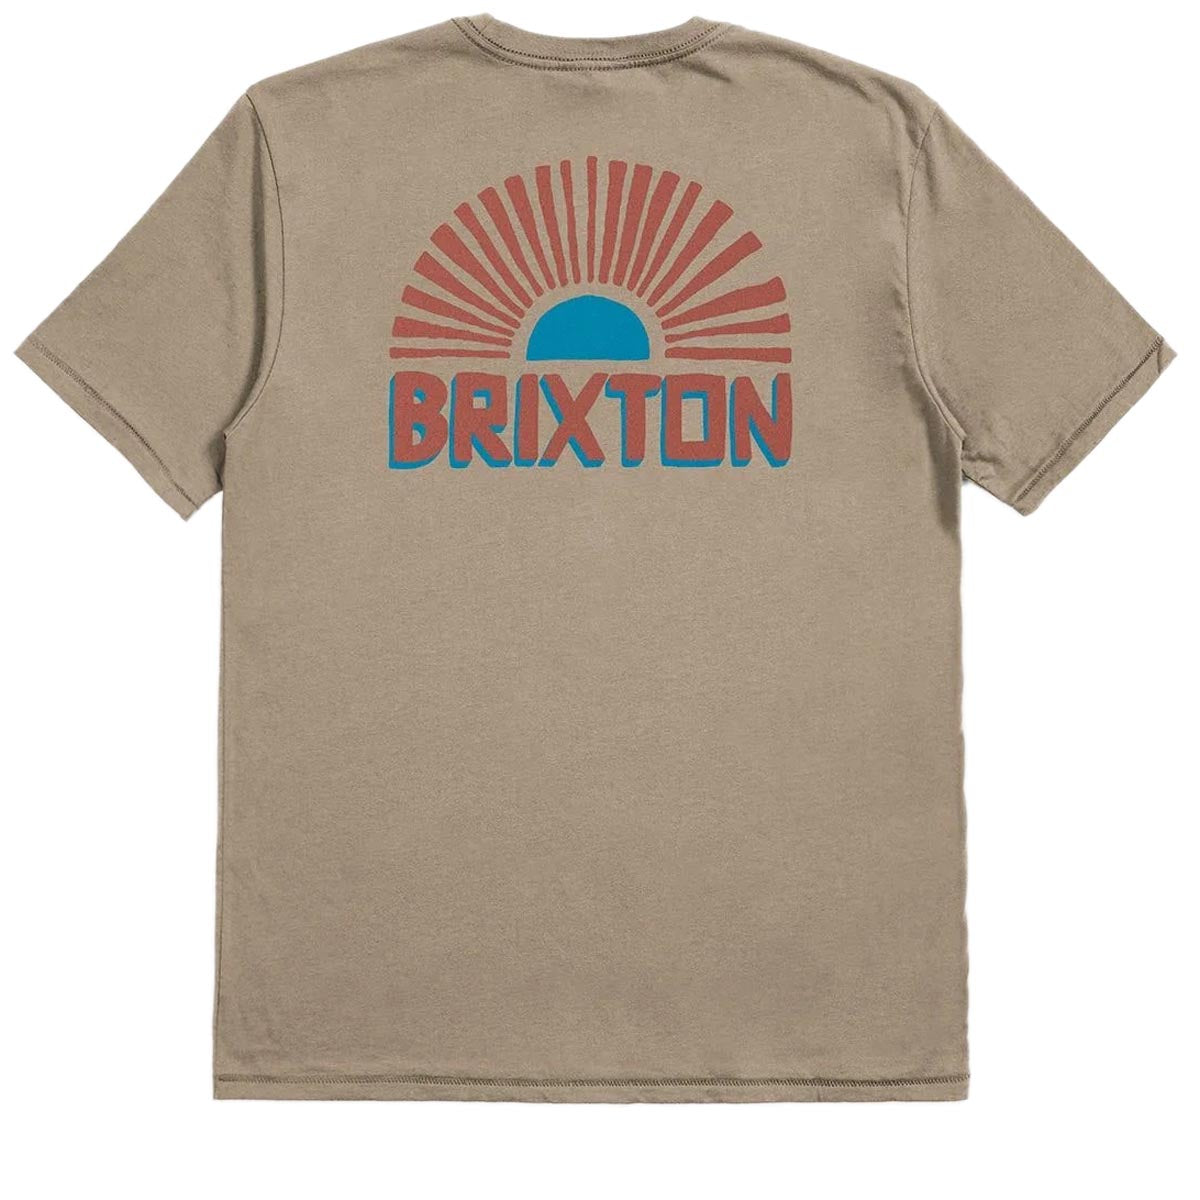 Brixton Fairview T-Shirt - Oatmeal image 1